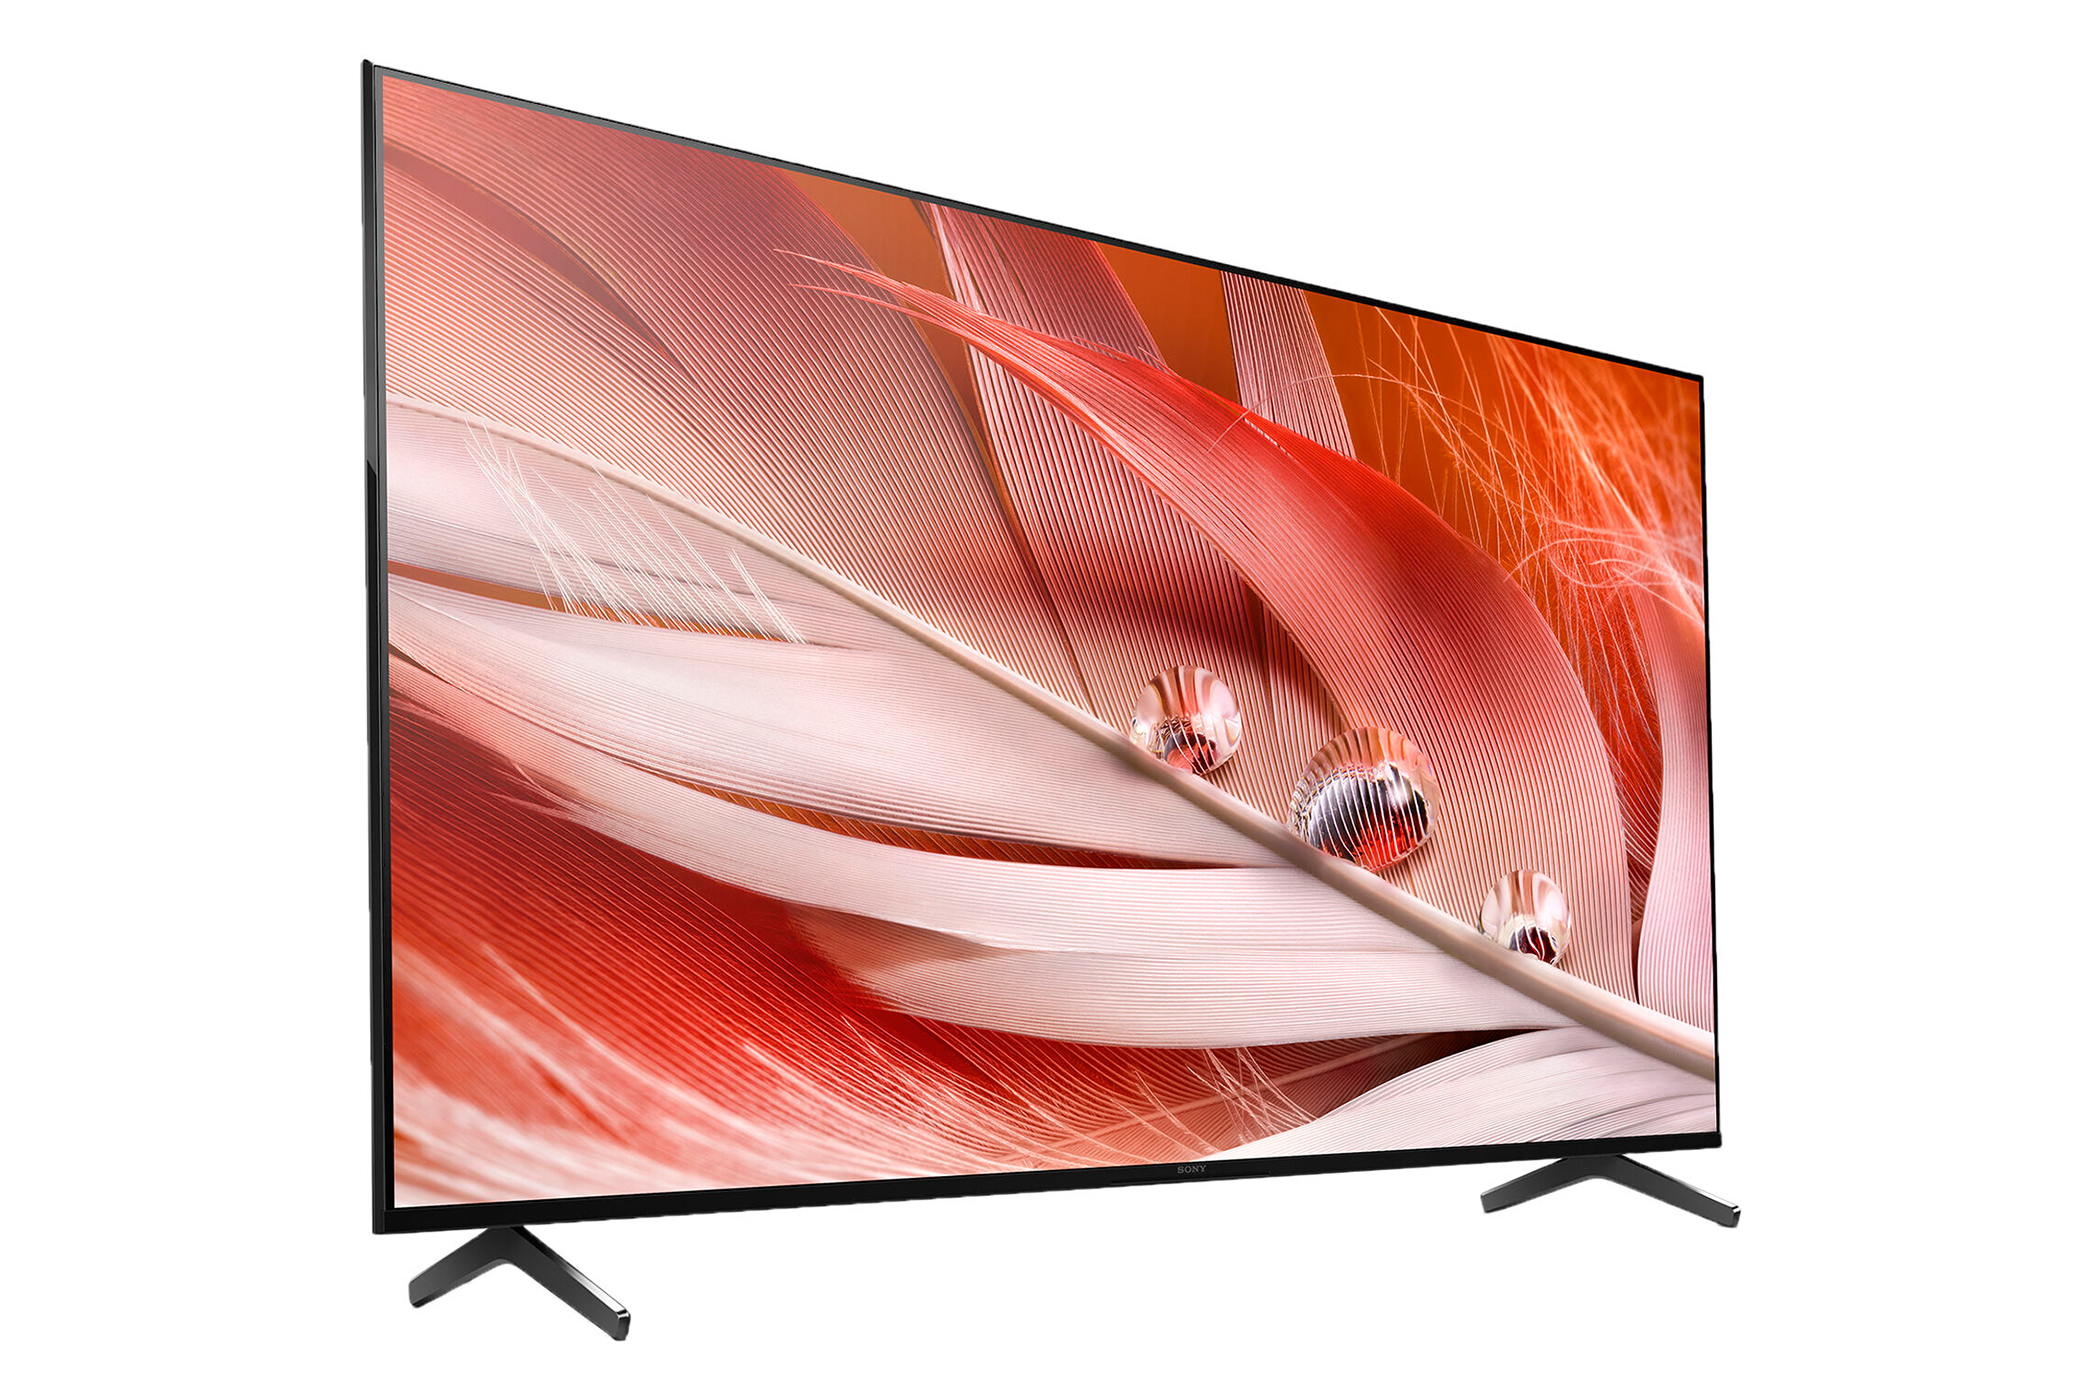 قیمت تلویزیون سونی X90J مدل 55 اینچ + مشخصات